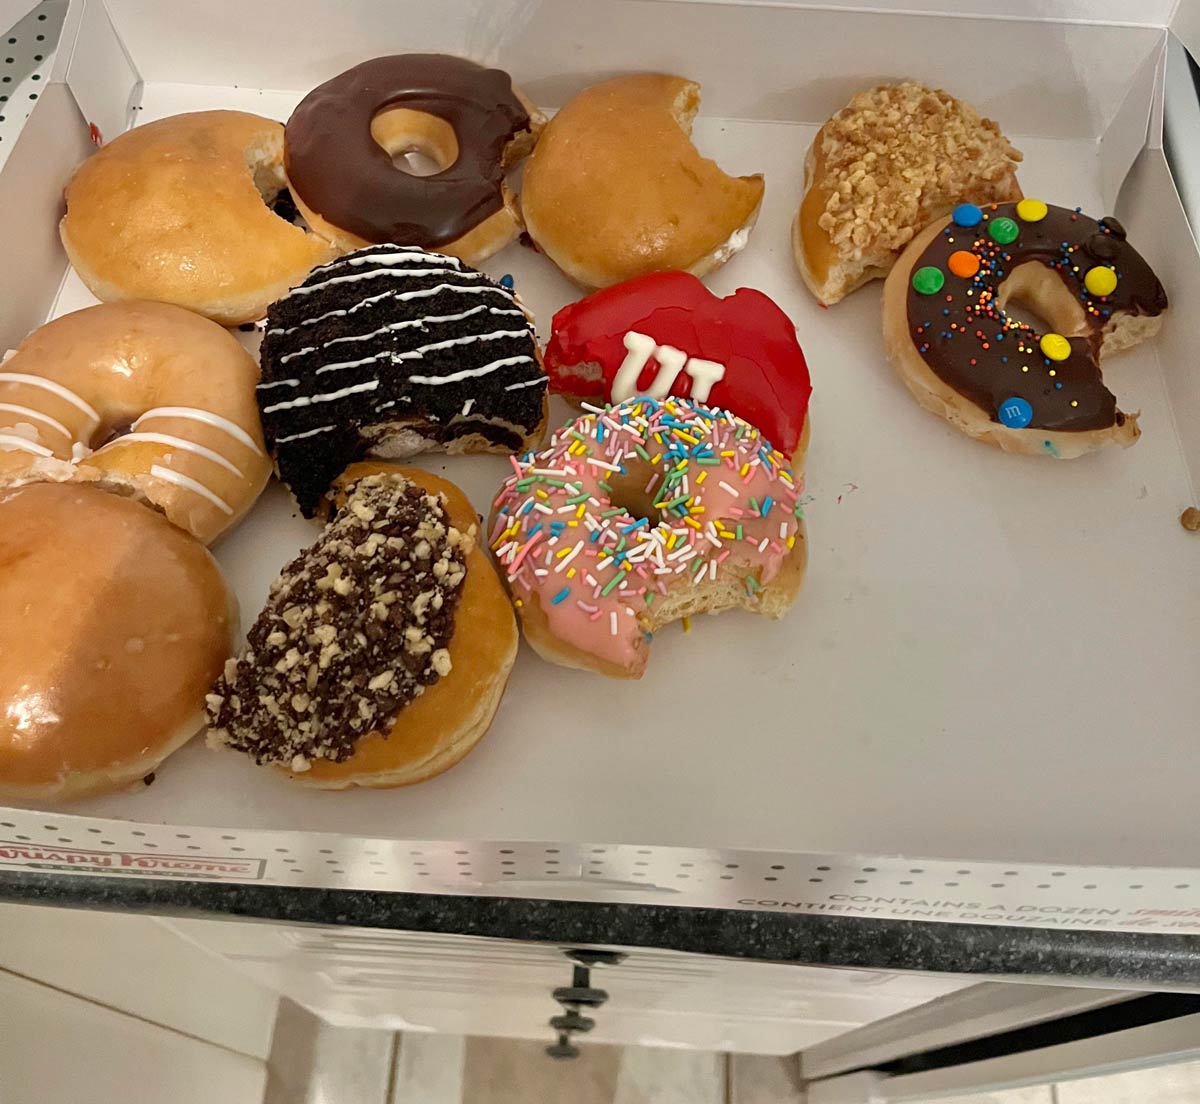 My sister “taste tested” our krispy kreme donuts